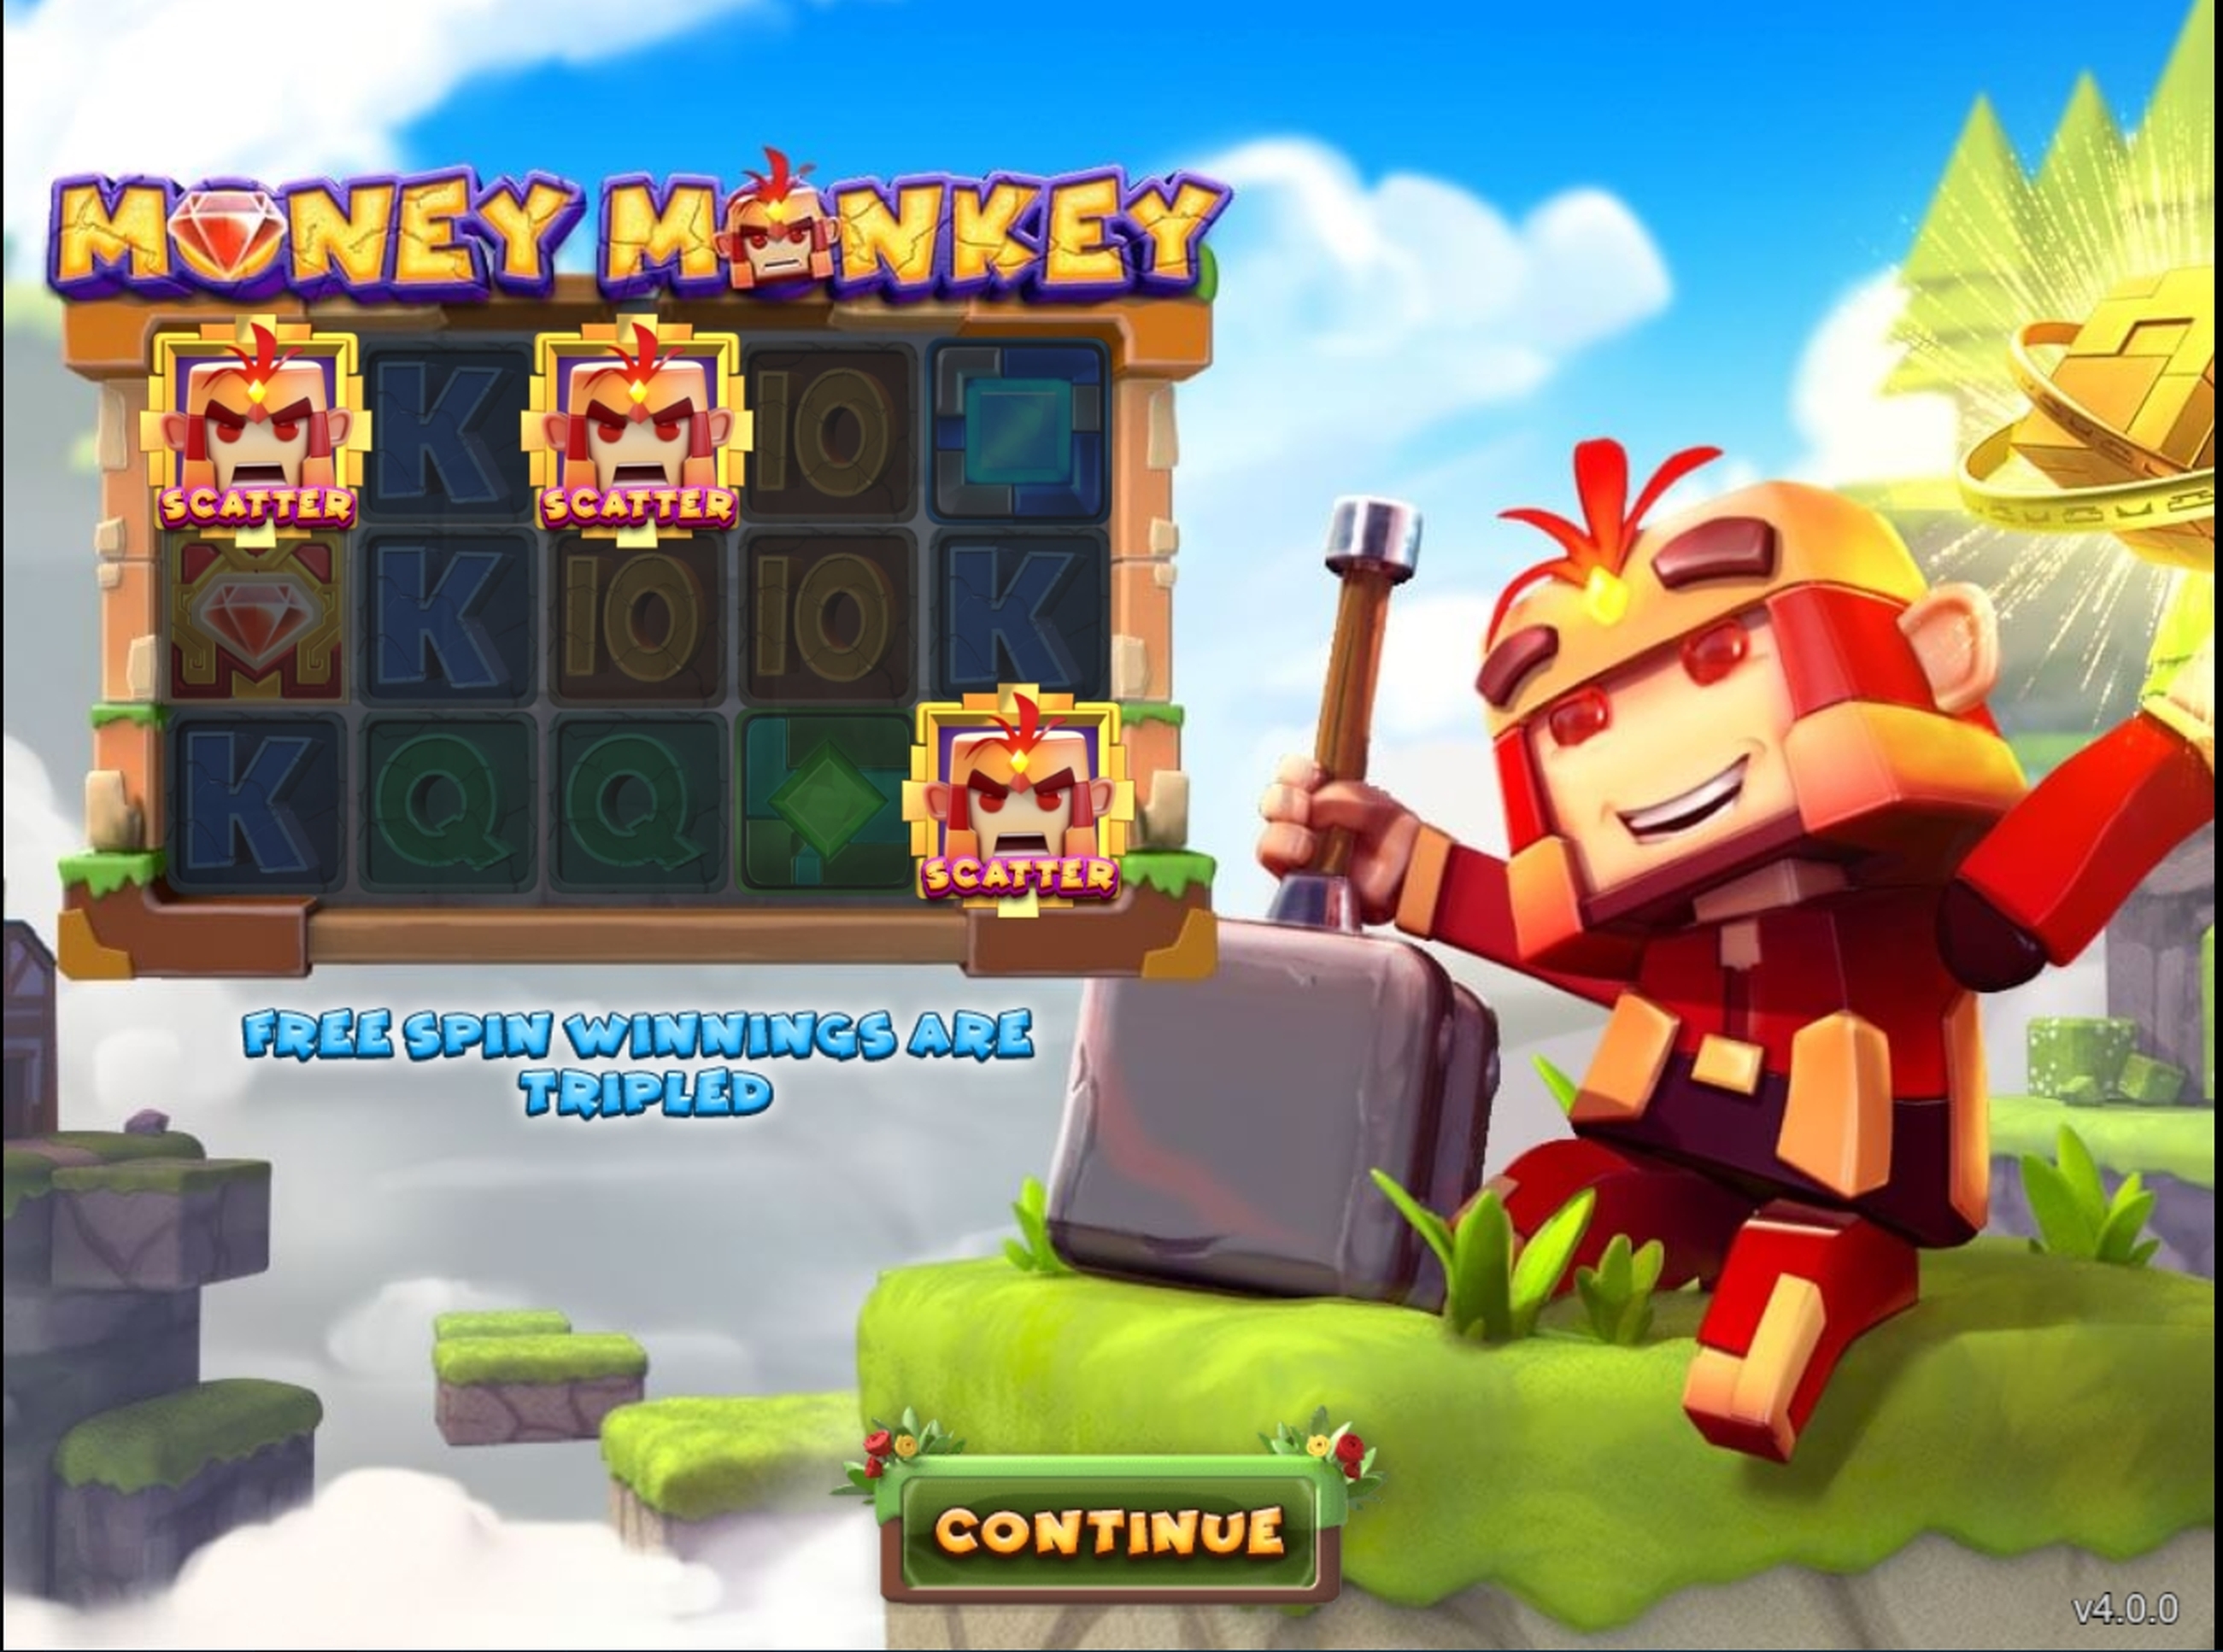 Play Money Monkey Free Casino Slot Game by Gameplay Interactive